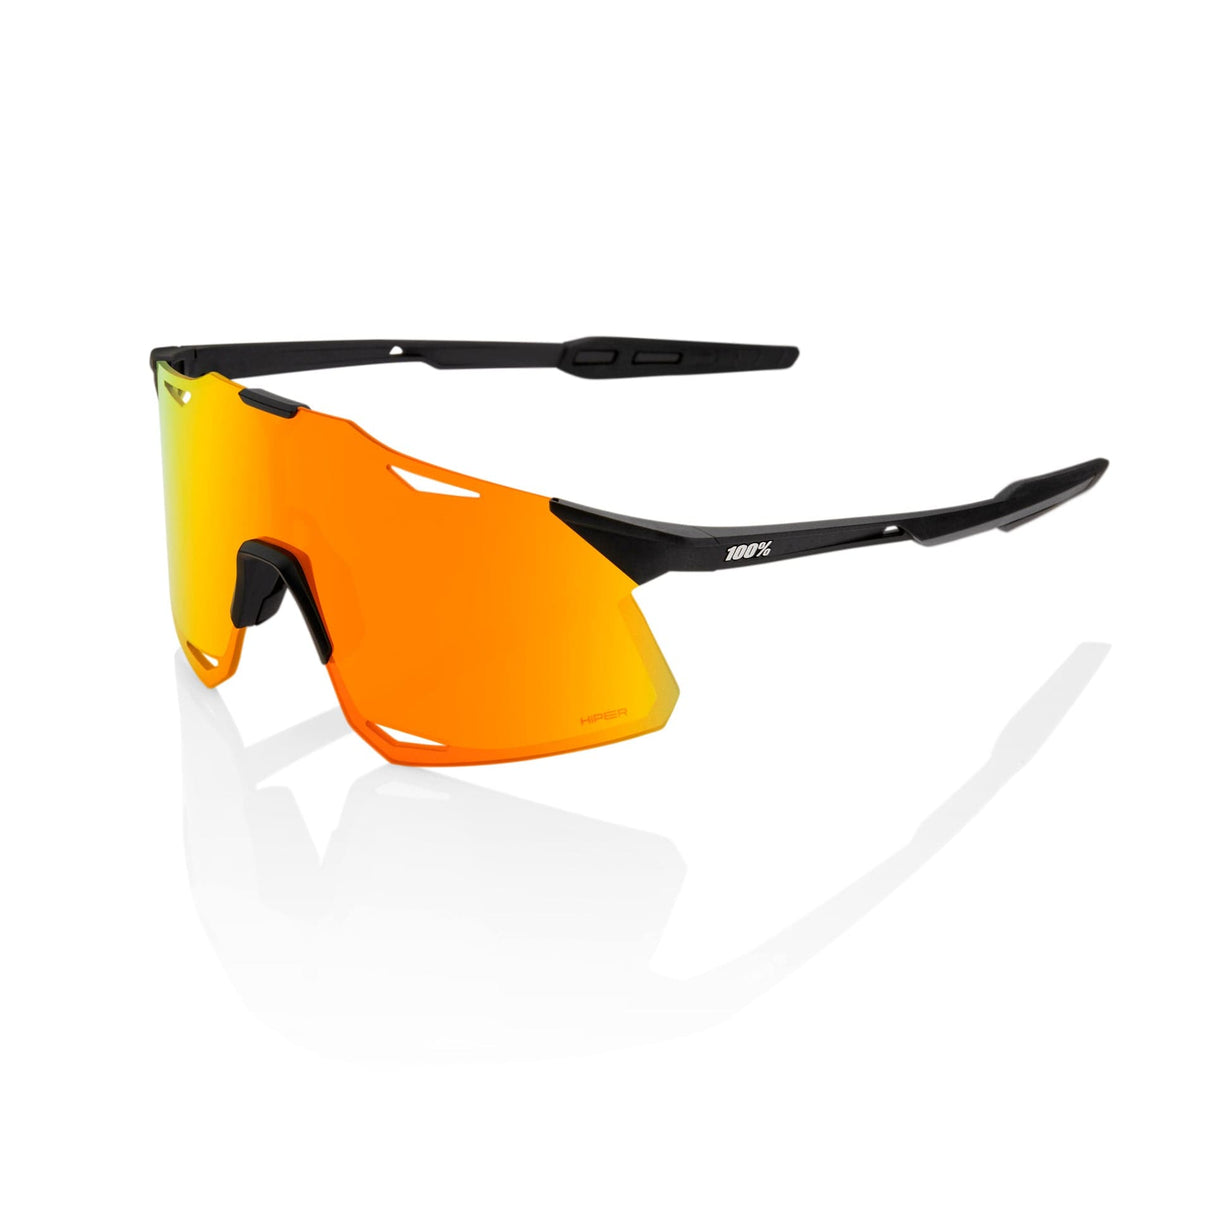 100 Percent Hypercraft Sunglasses - Matte Black/Hiper Red Lens electric bike glasses